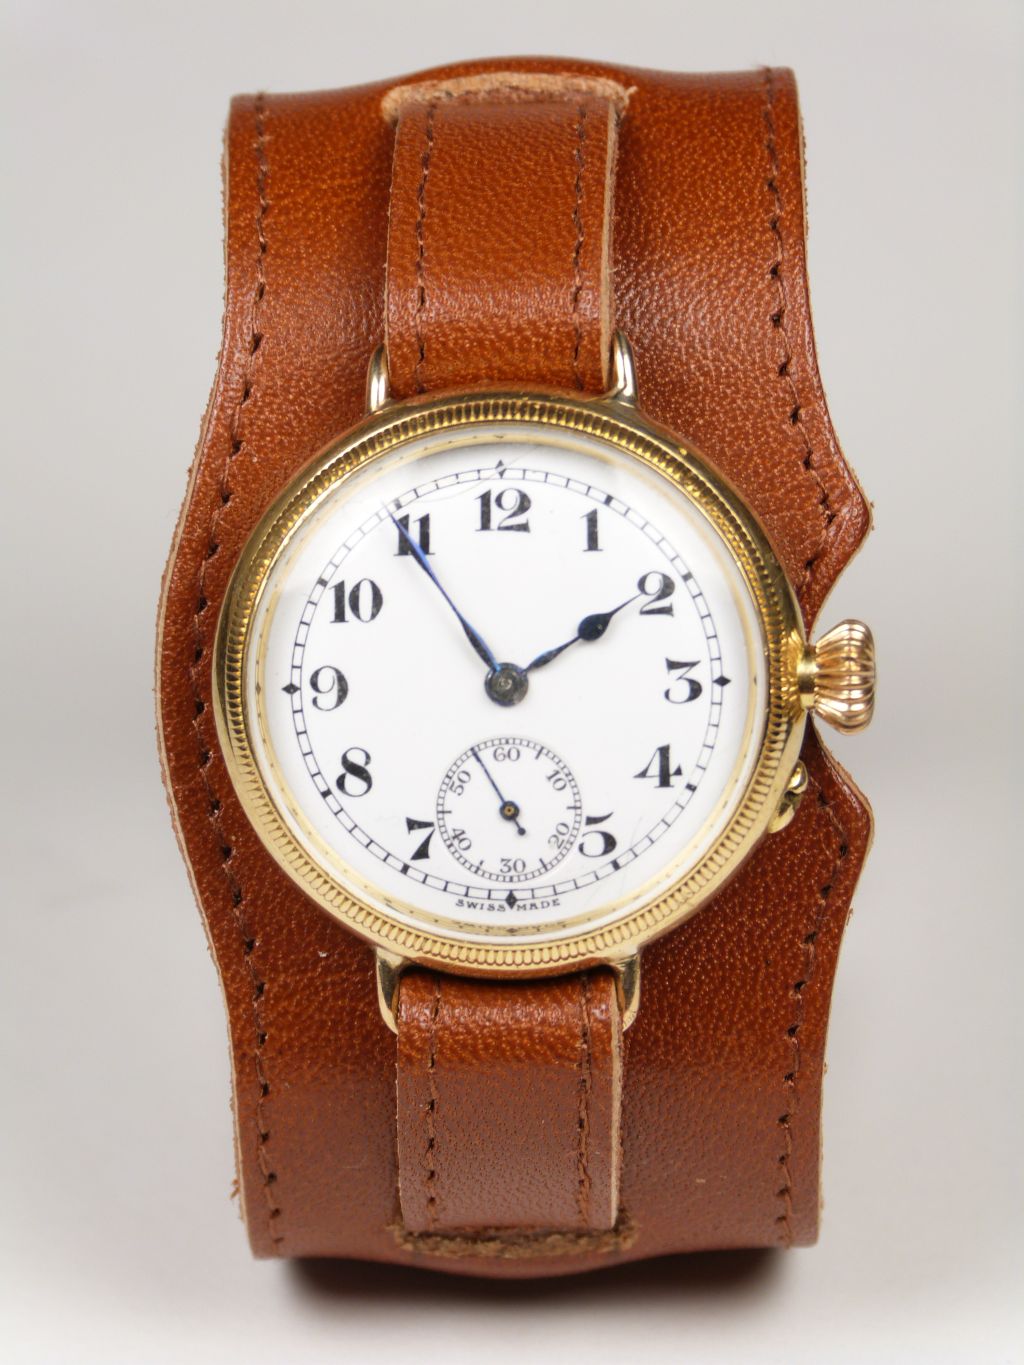 IWC wristwatch in Borgel case